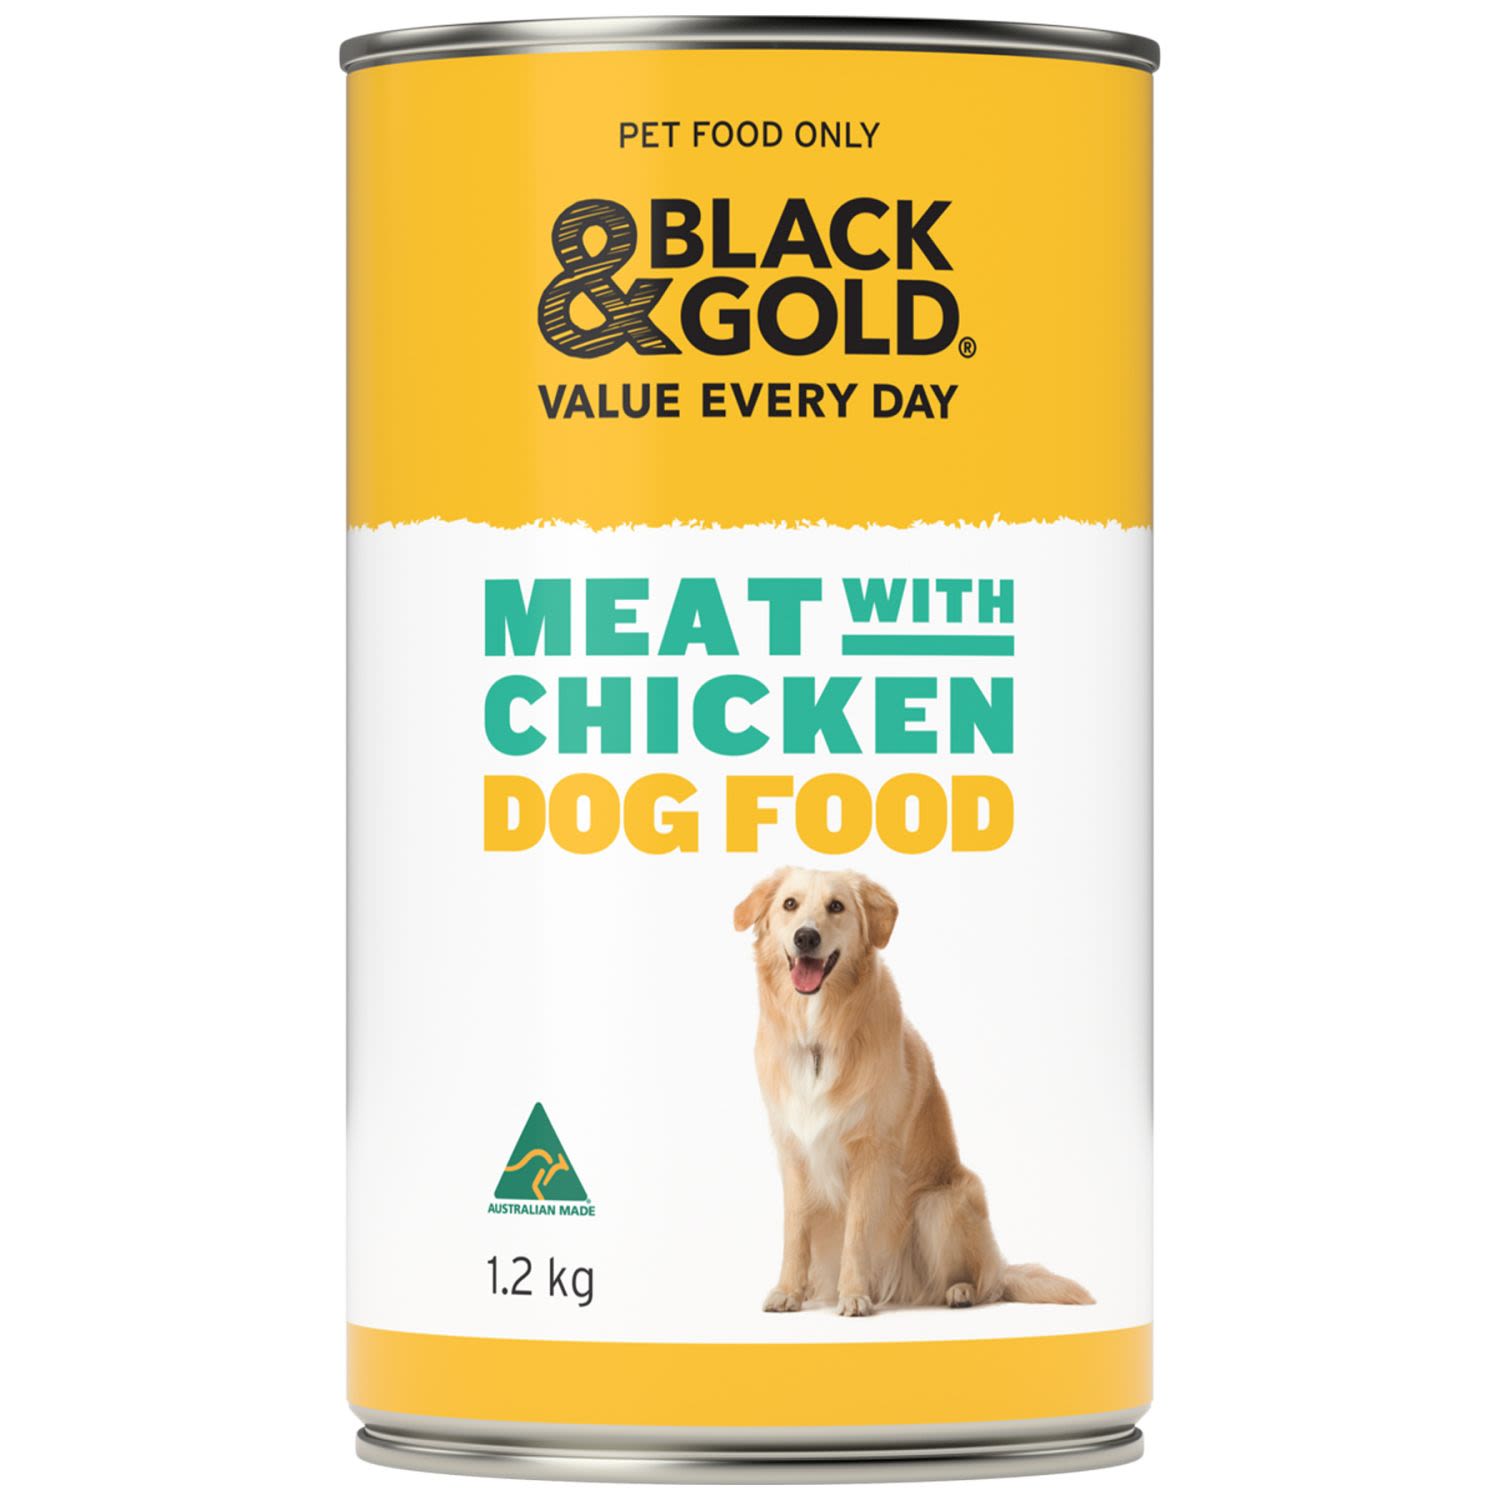 Black & Gold Meat With Chicken Dog Food, 1.2 Kilogram